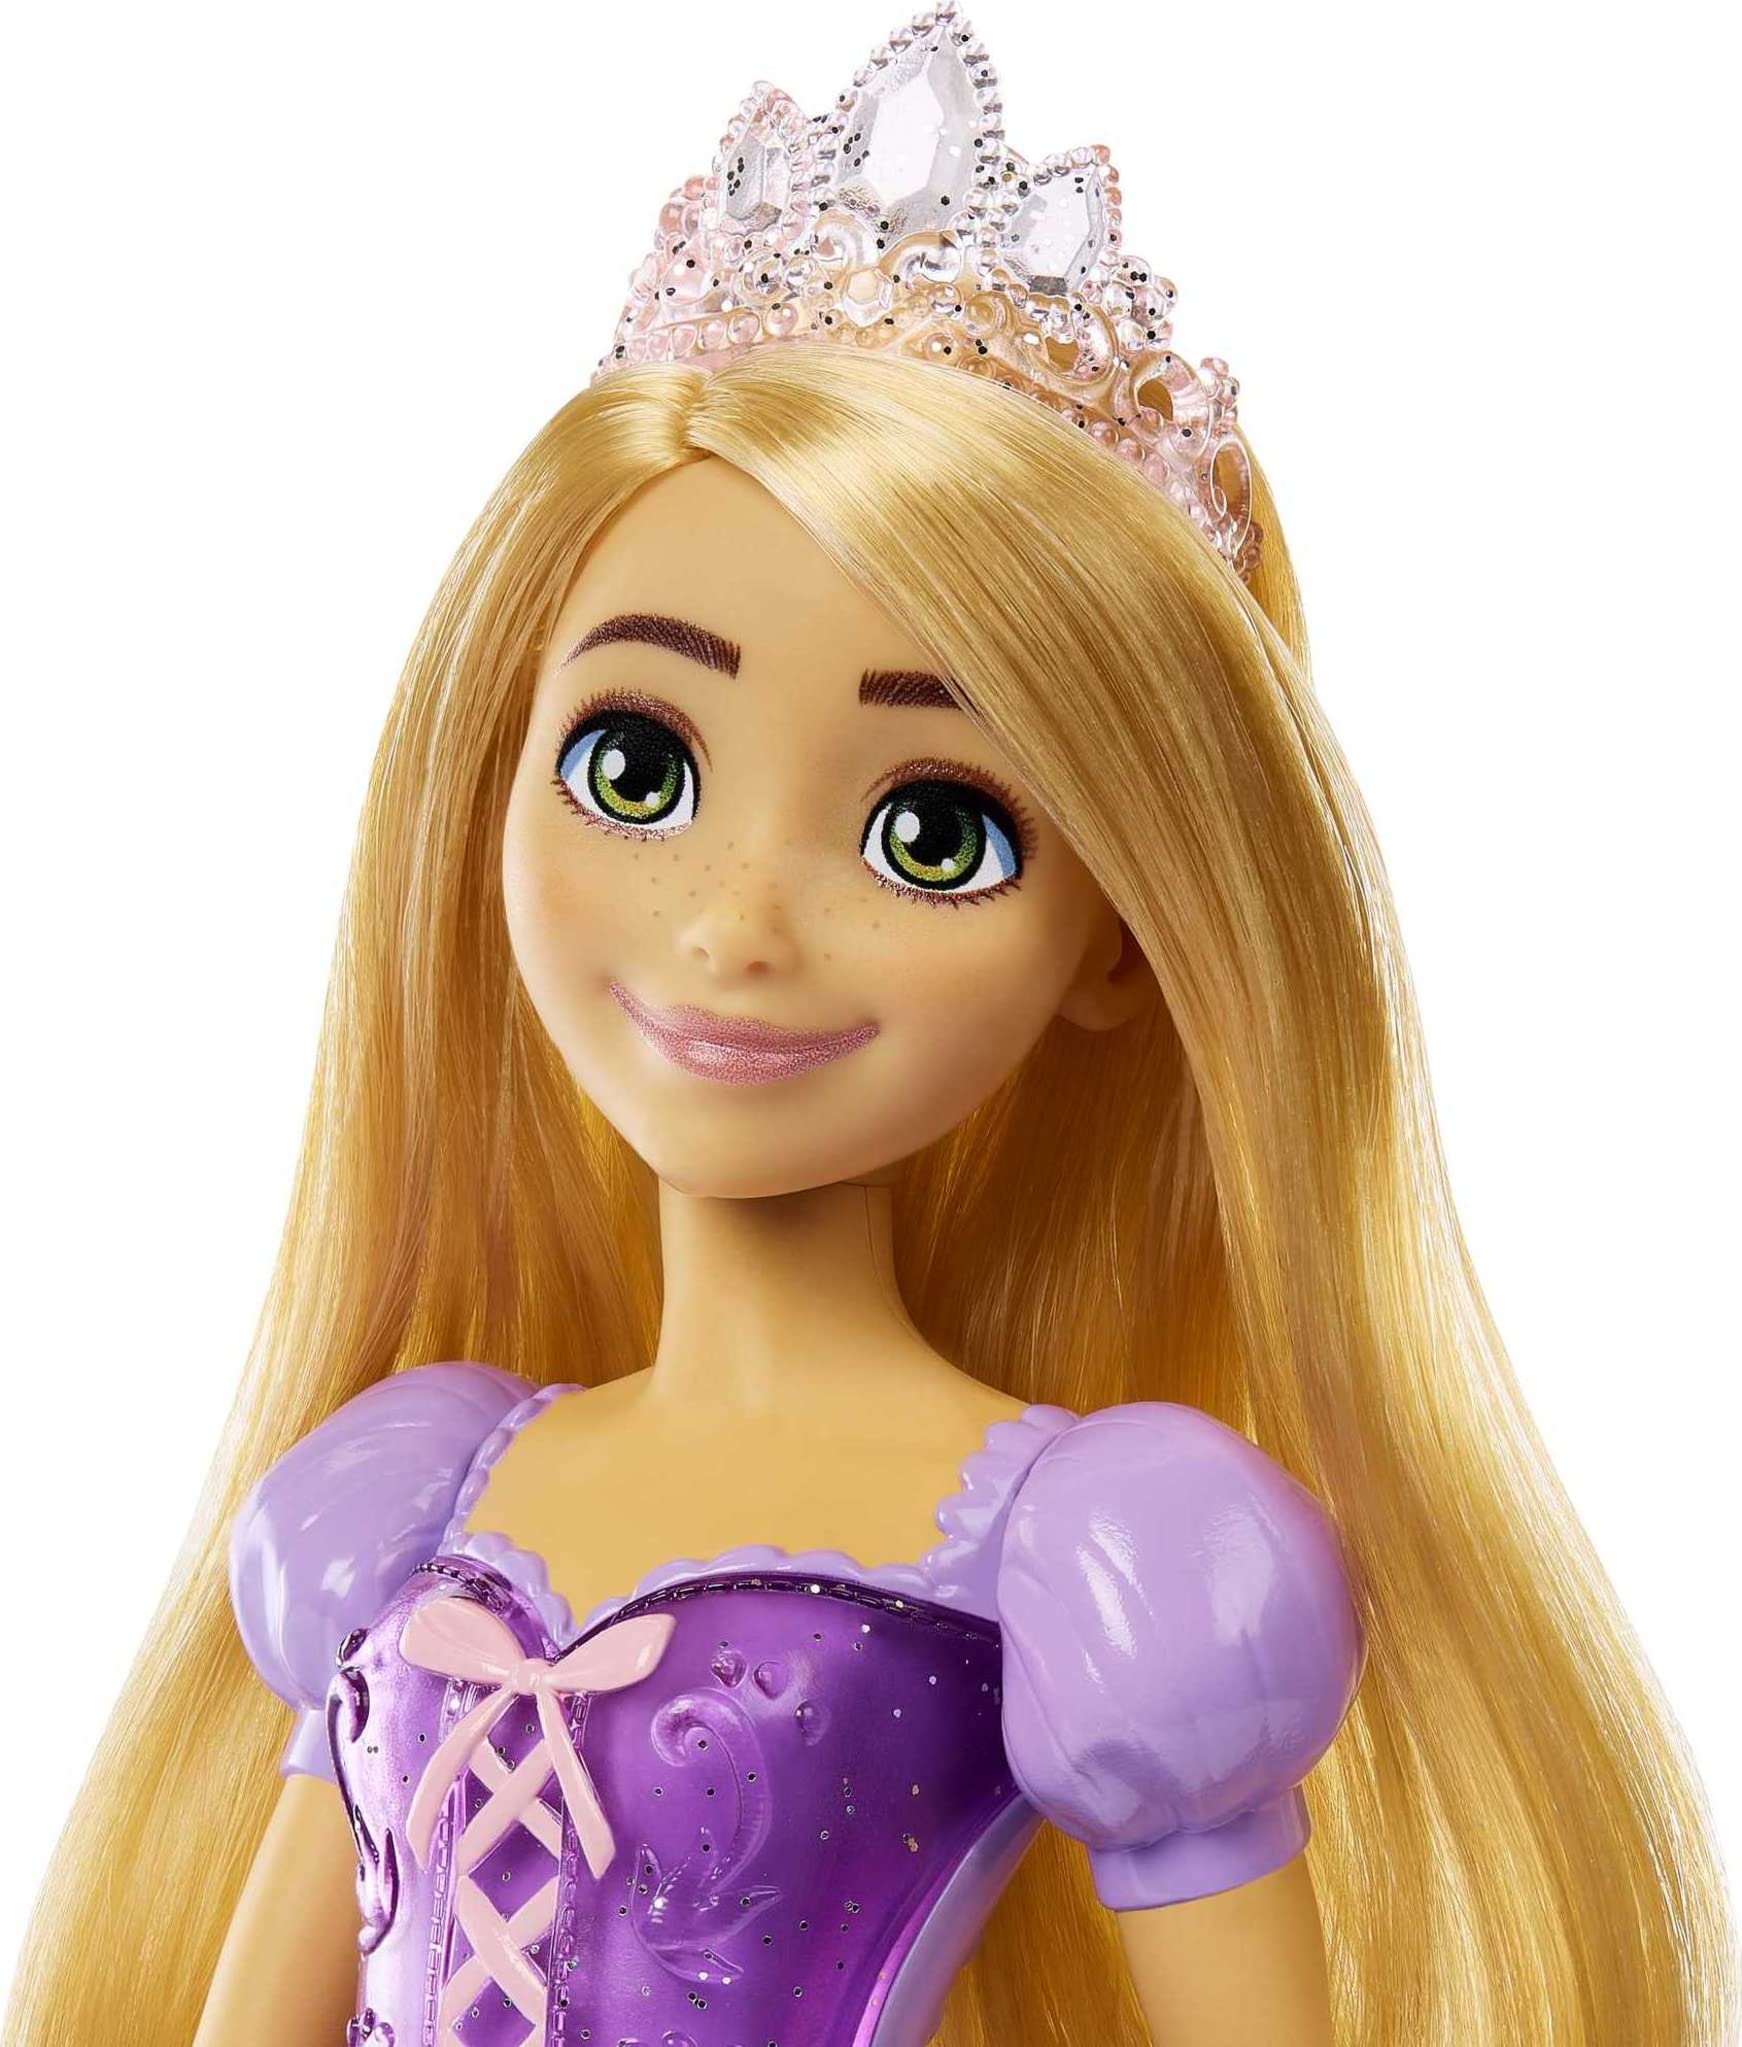 Mattel Disney Princess Rapunzel Fashion Doll, Sparkling Look with Blonde Hair, Blue Eyes & Tiara Accessory